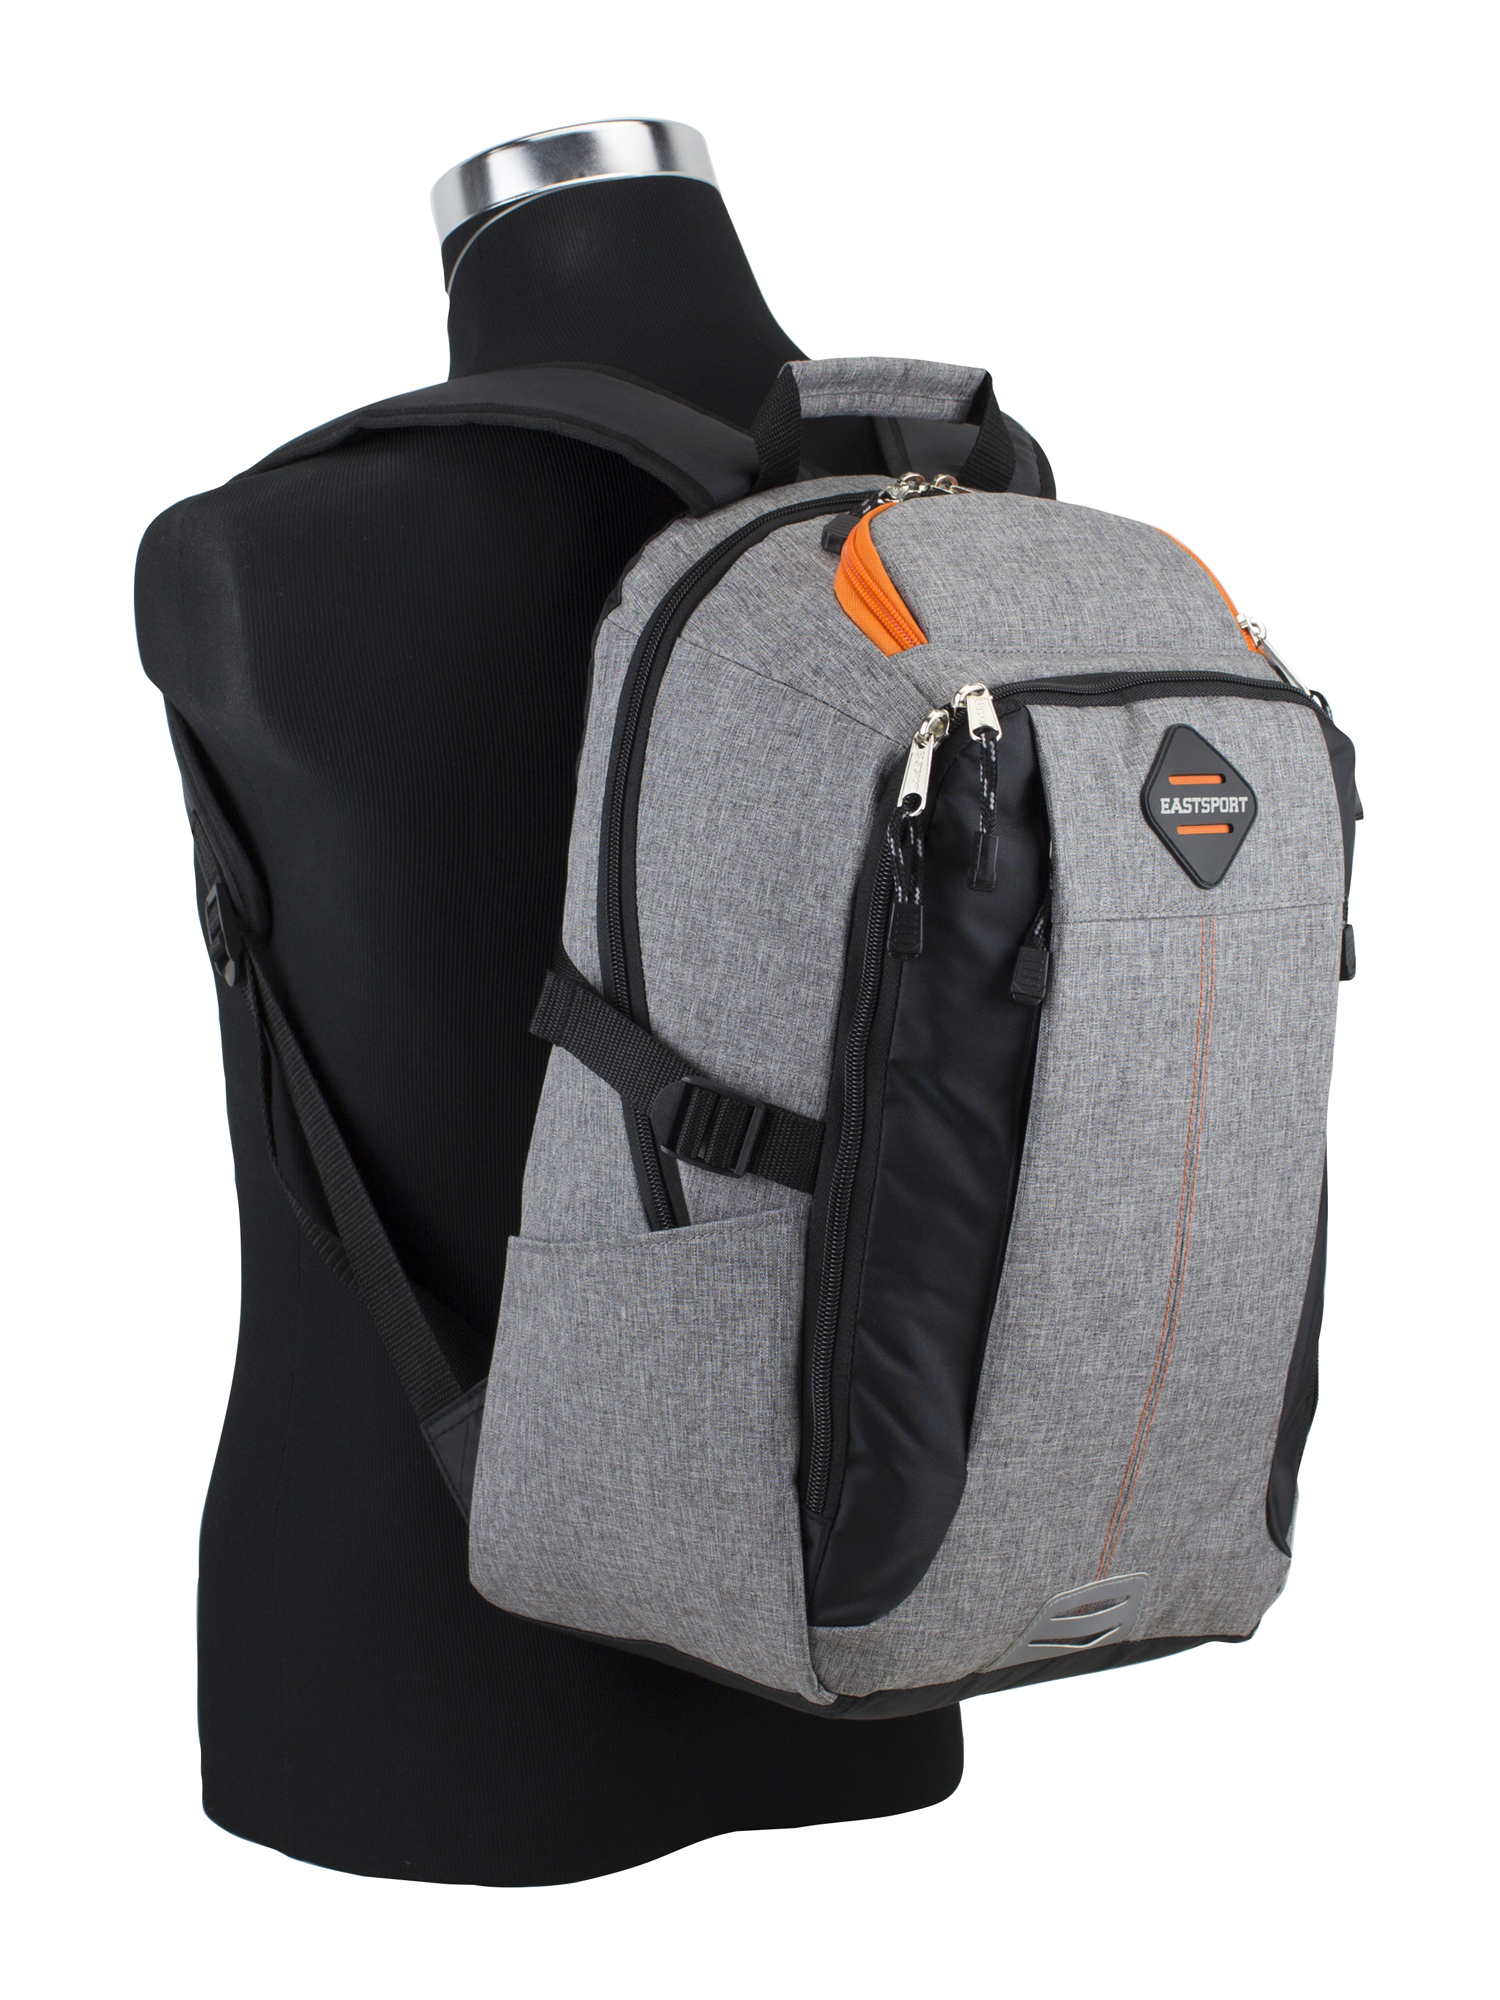 Eastsport Multi-Purpose Pro Defender Mid Grey Backpack with Adjustable Straps - image 2 of 6